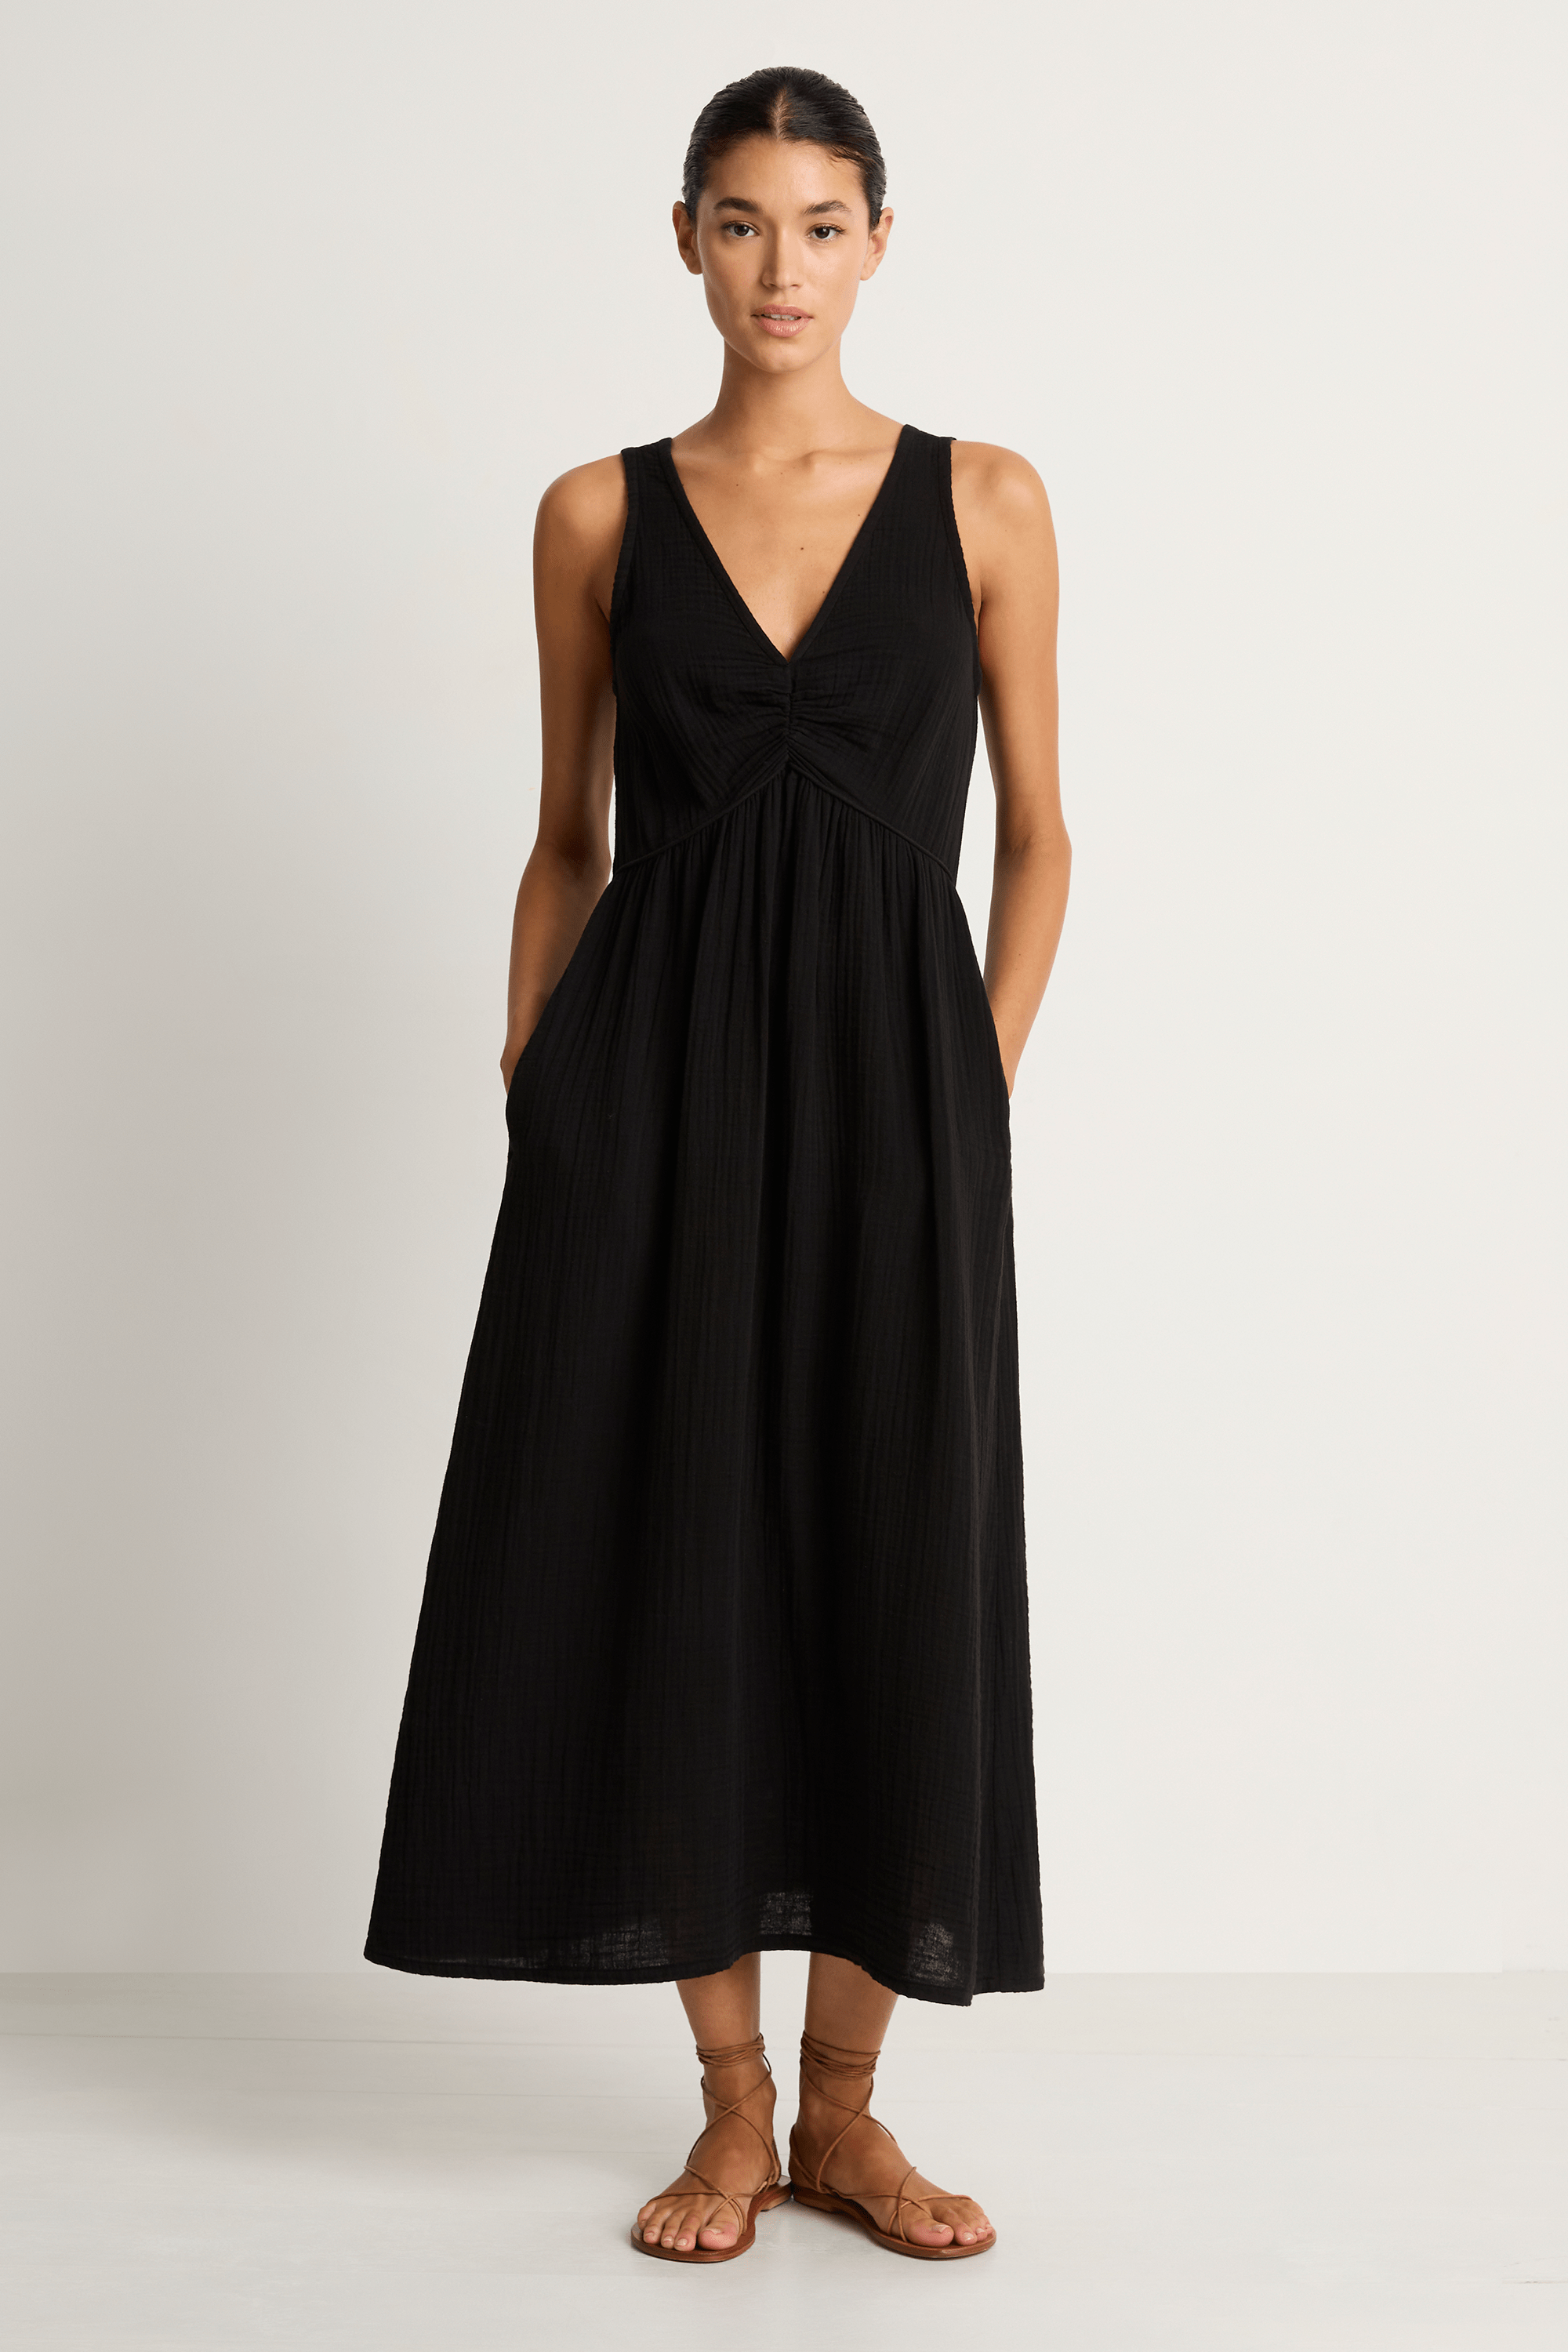 Xirena Faedra dress in black